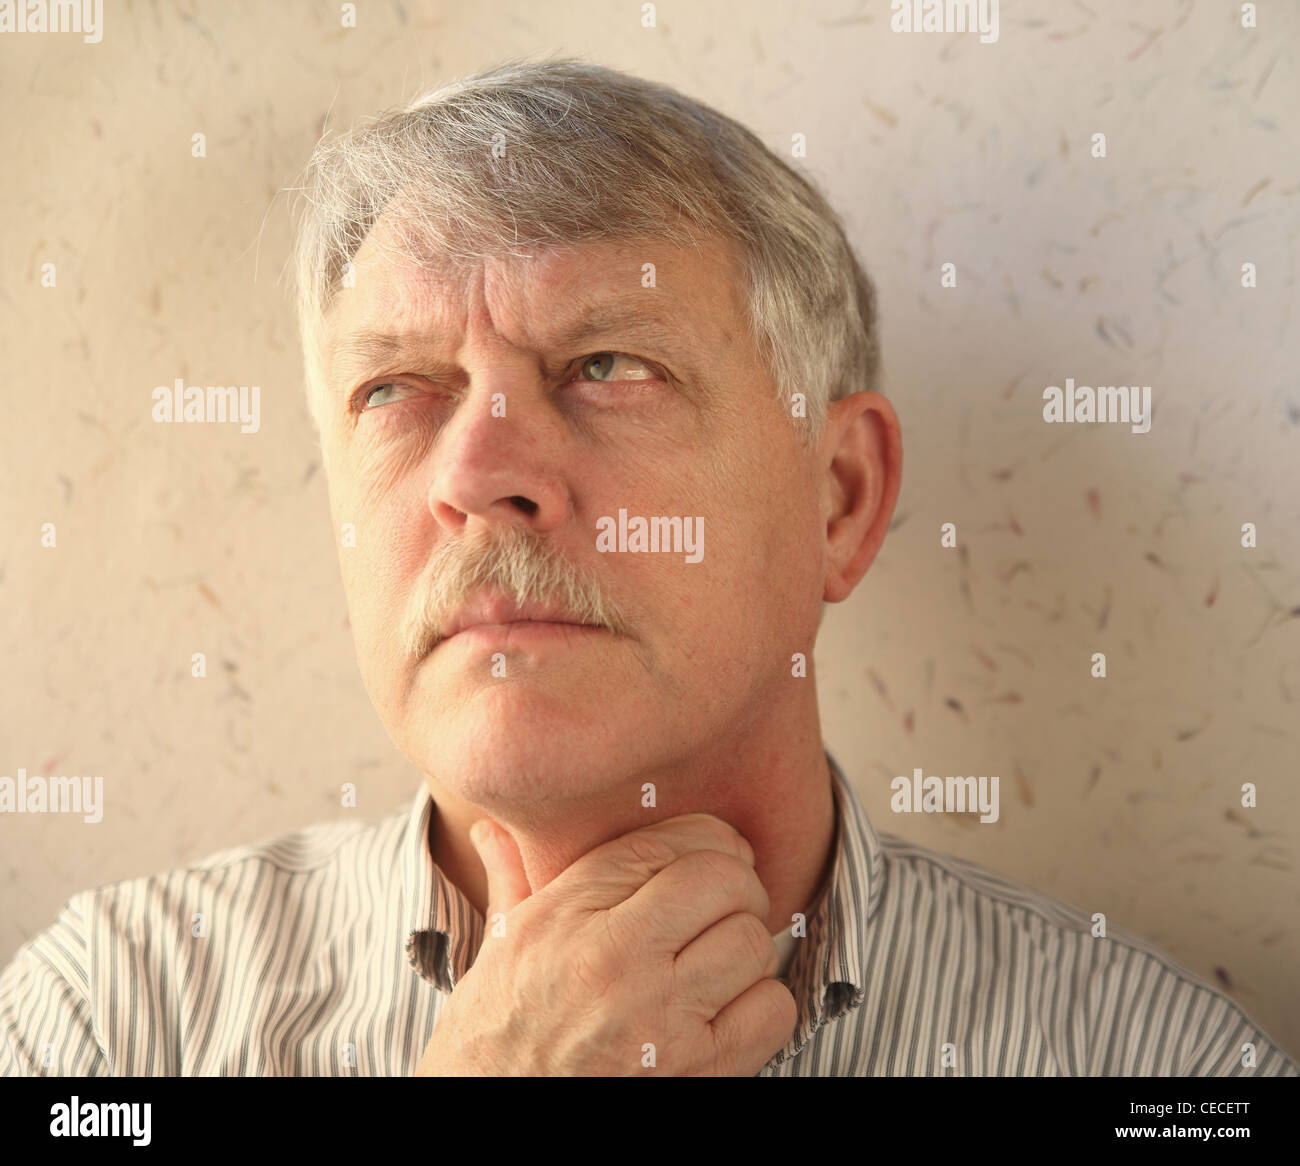 older man rubs his sore throat Stock Photo